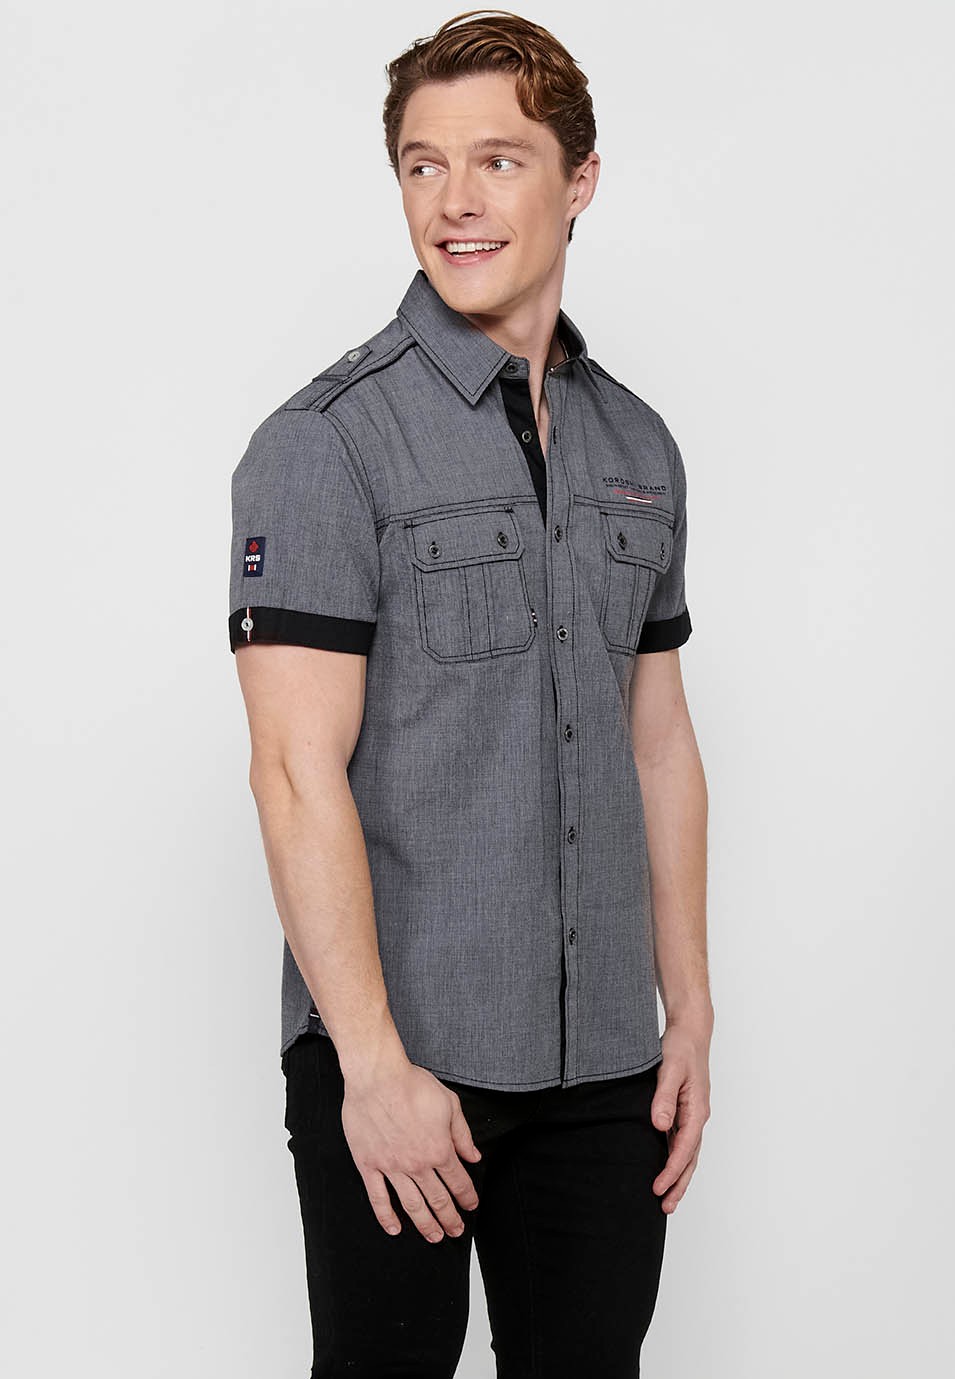 Camisa de algodón, manga corta, detalles hombro, color gris para hombre